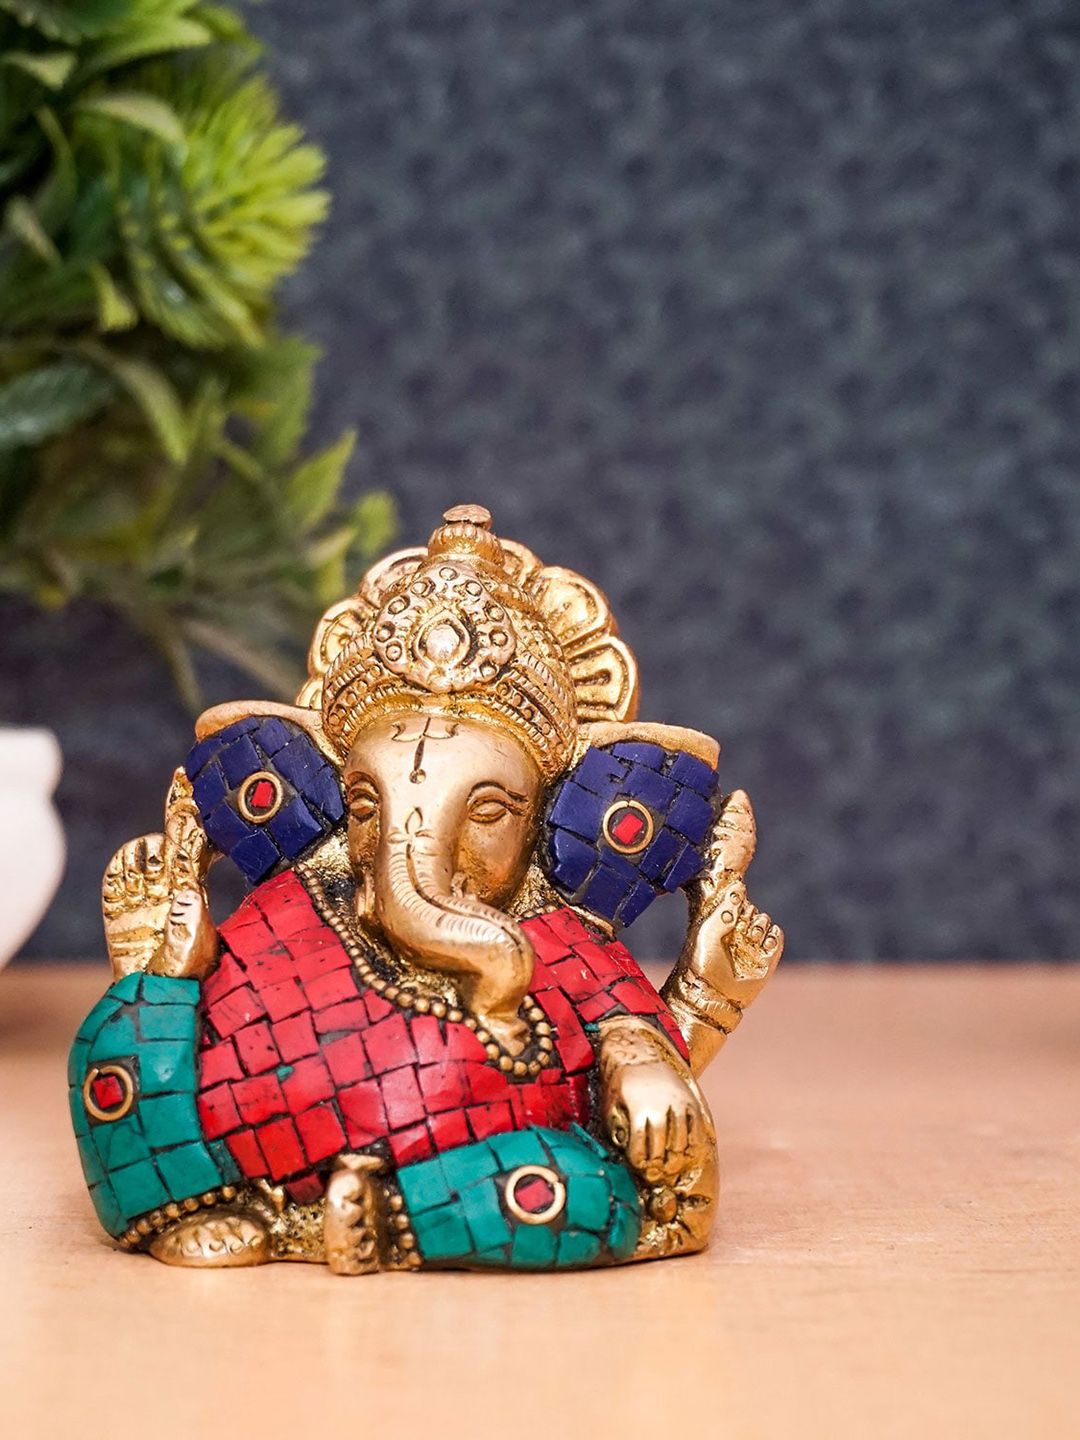 StatueStudio Gold-Toned & Red Lord Ganesha Idol Figurine Showpiece Price in India